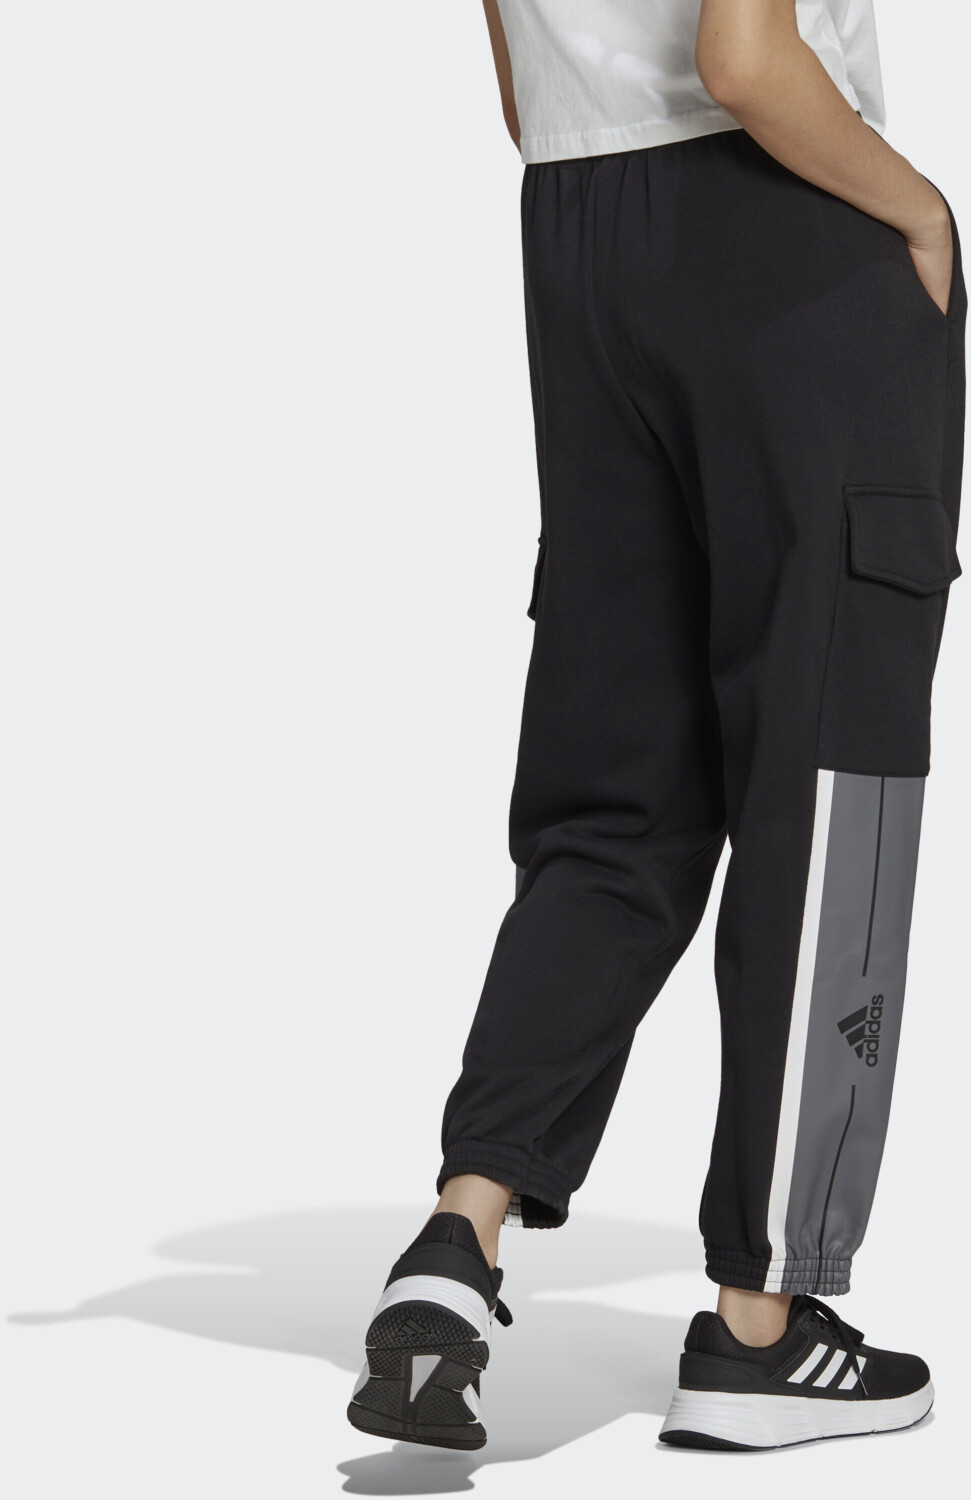 Four/white ab € (HL2110) Fleece Essentials Preisvergleich Pin black/grey | Pants Adidas bei Block 23,99 Woman Cargo Stripe